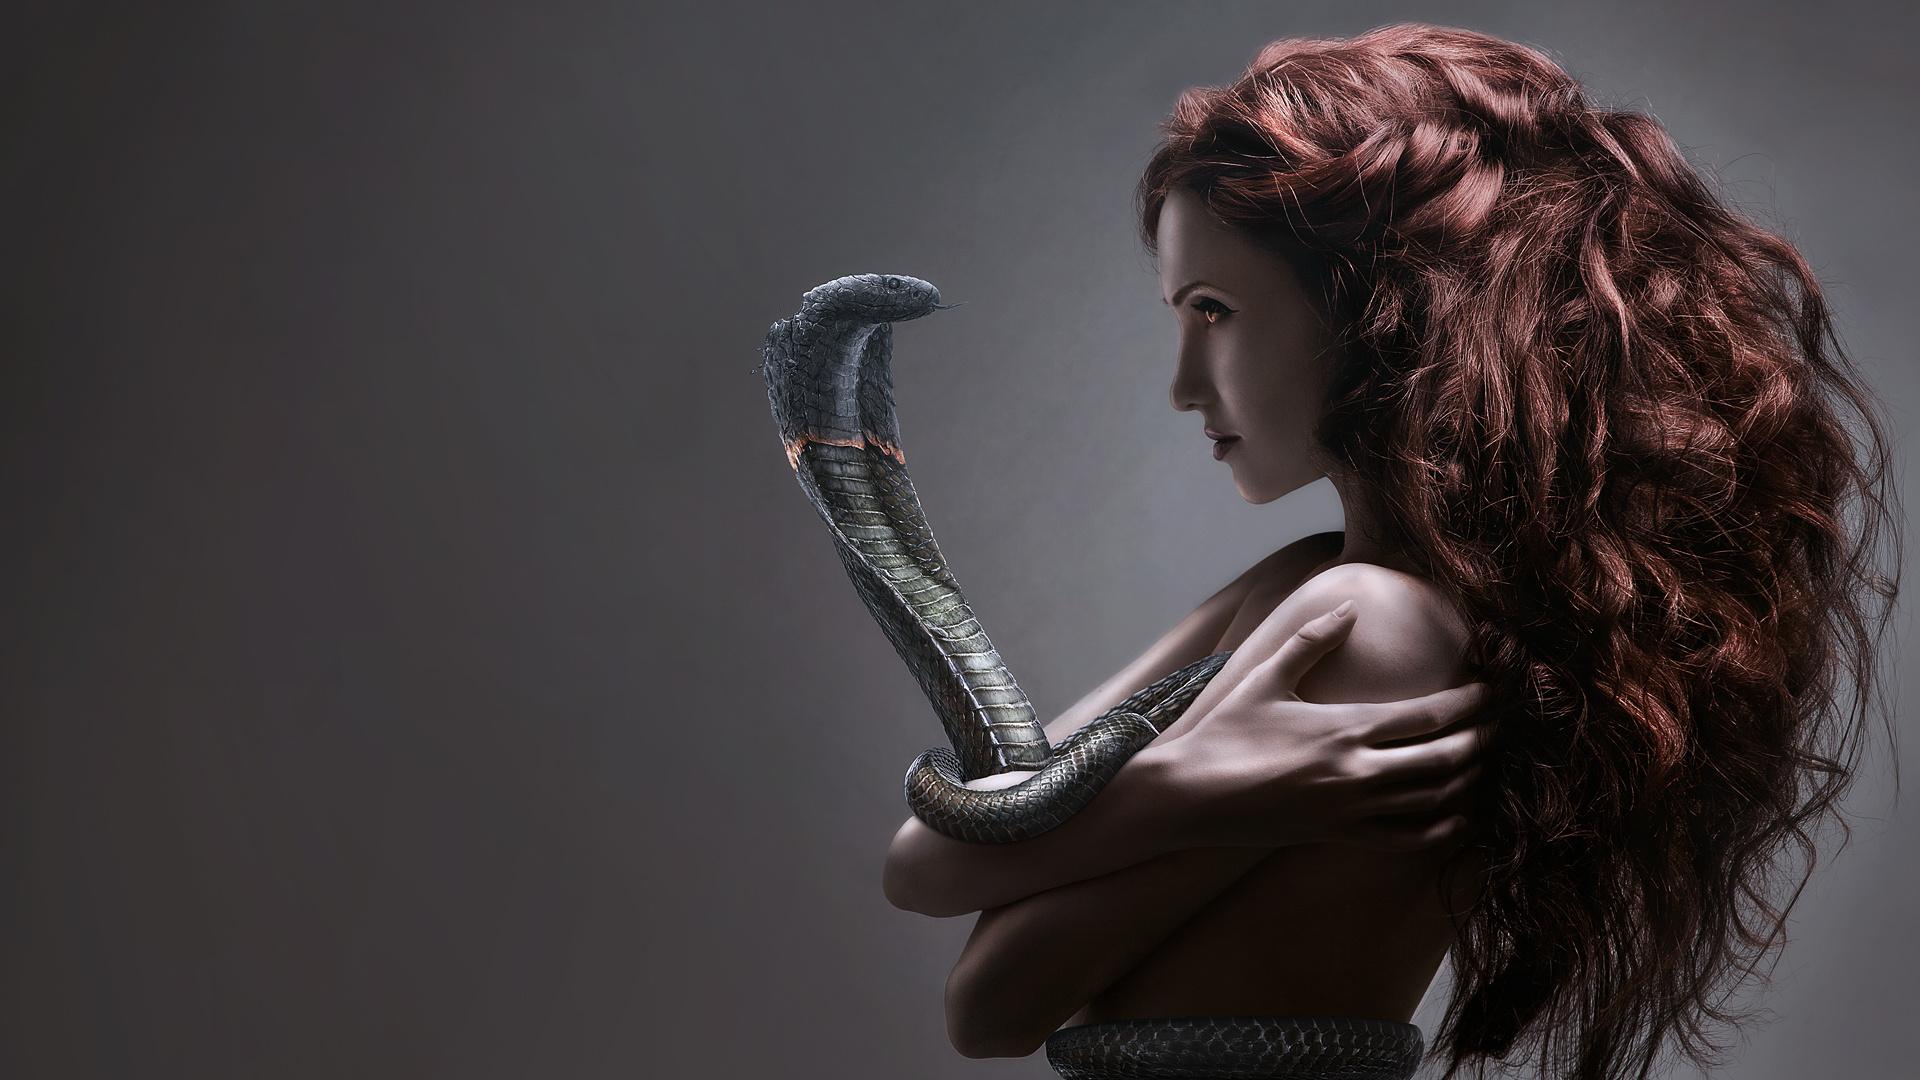 Cobra Snake Fantasy Women Redhead Wallpaper and Free